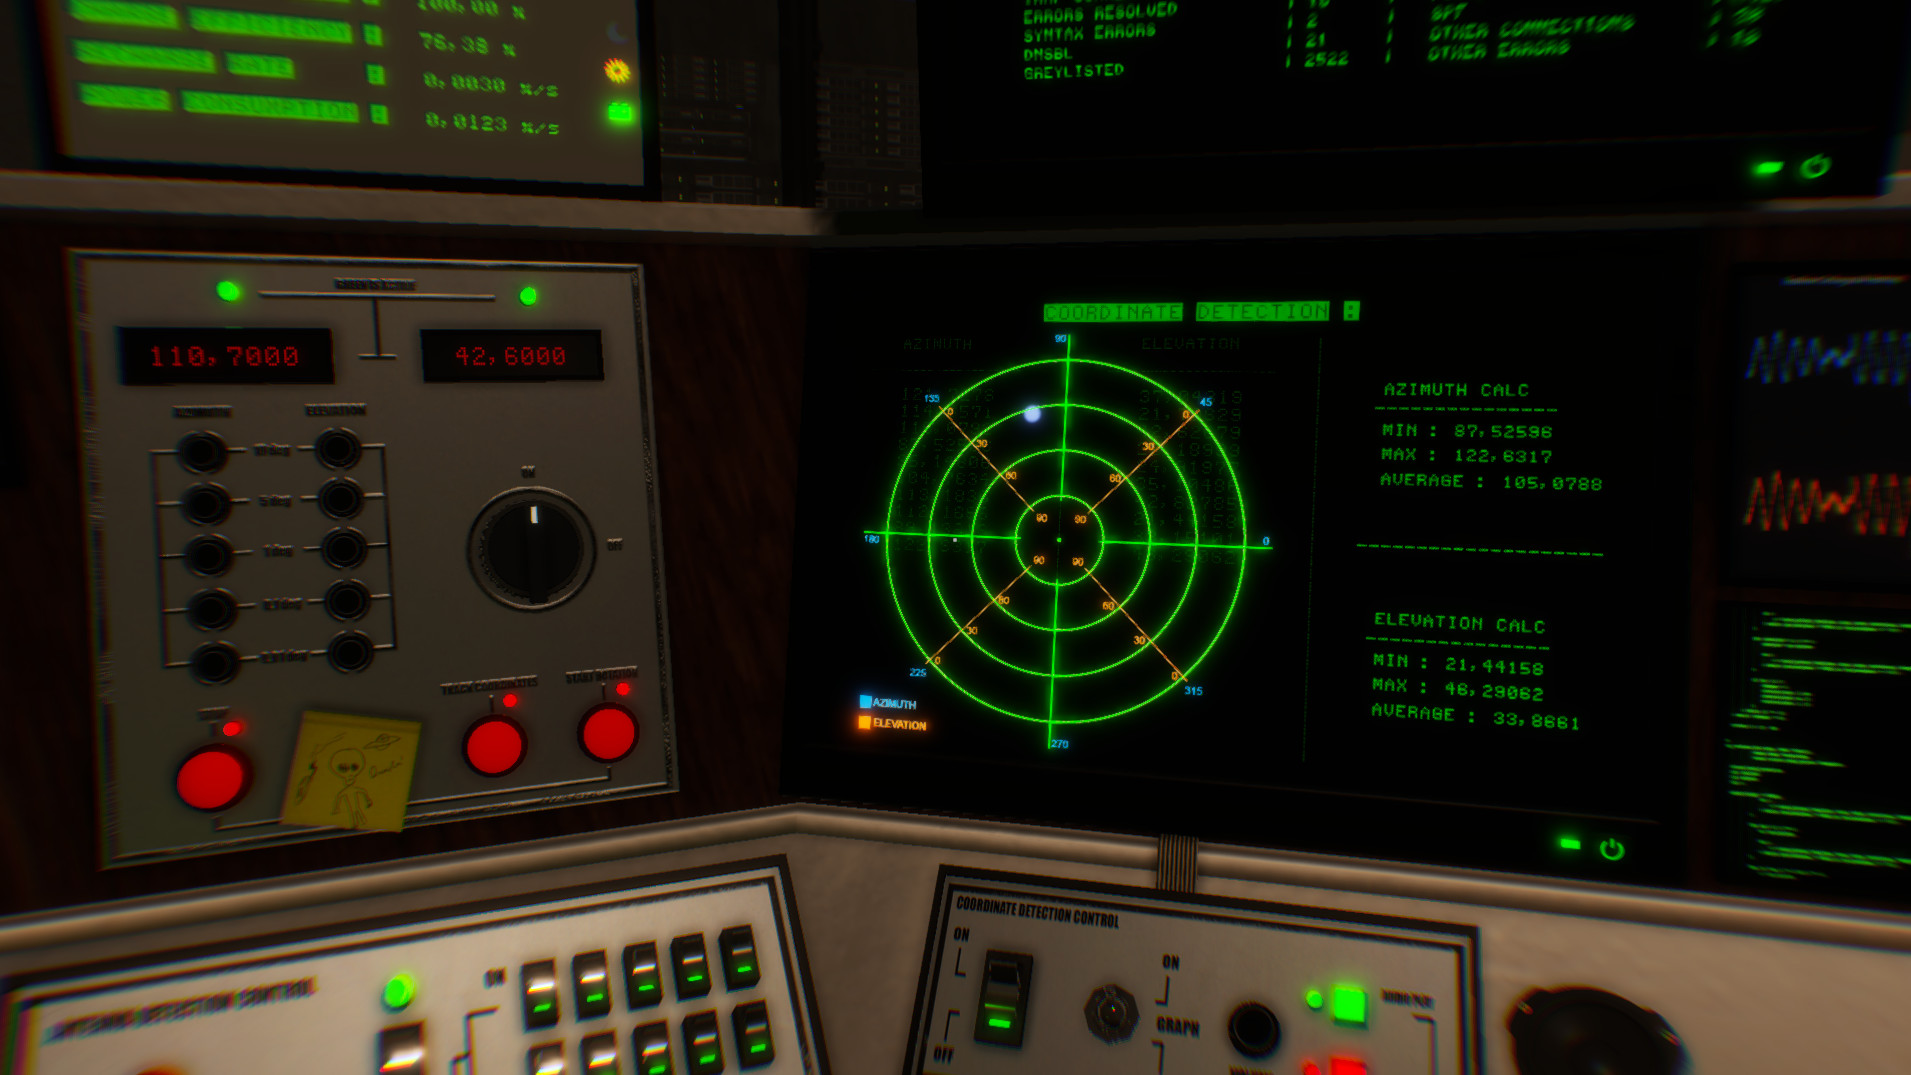 Signal Simulator On Steam